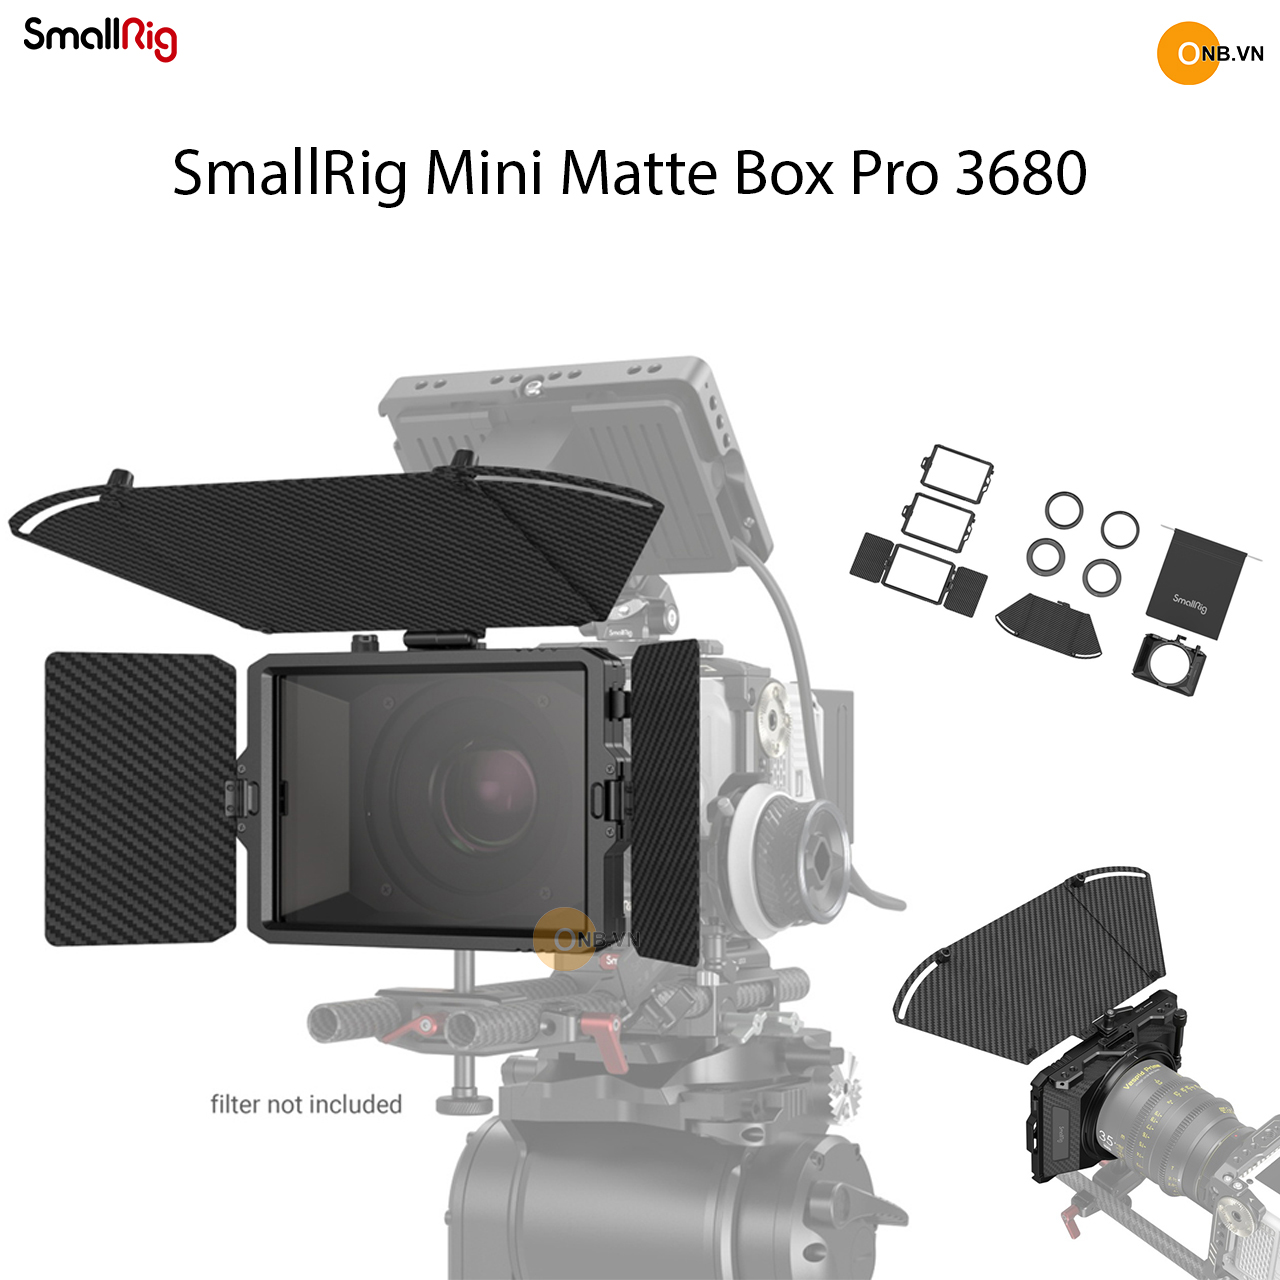 SmallRig Mini Matte Box Pro 3680 - Full set bộ hood che hỗ trợ quay